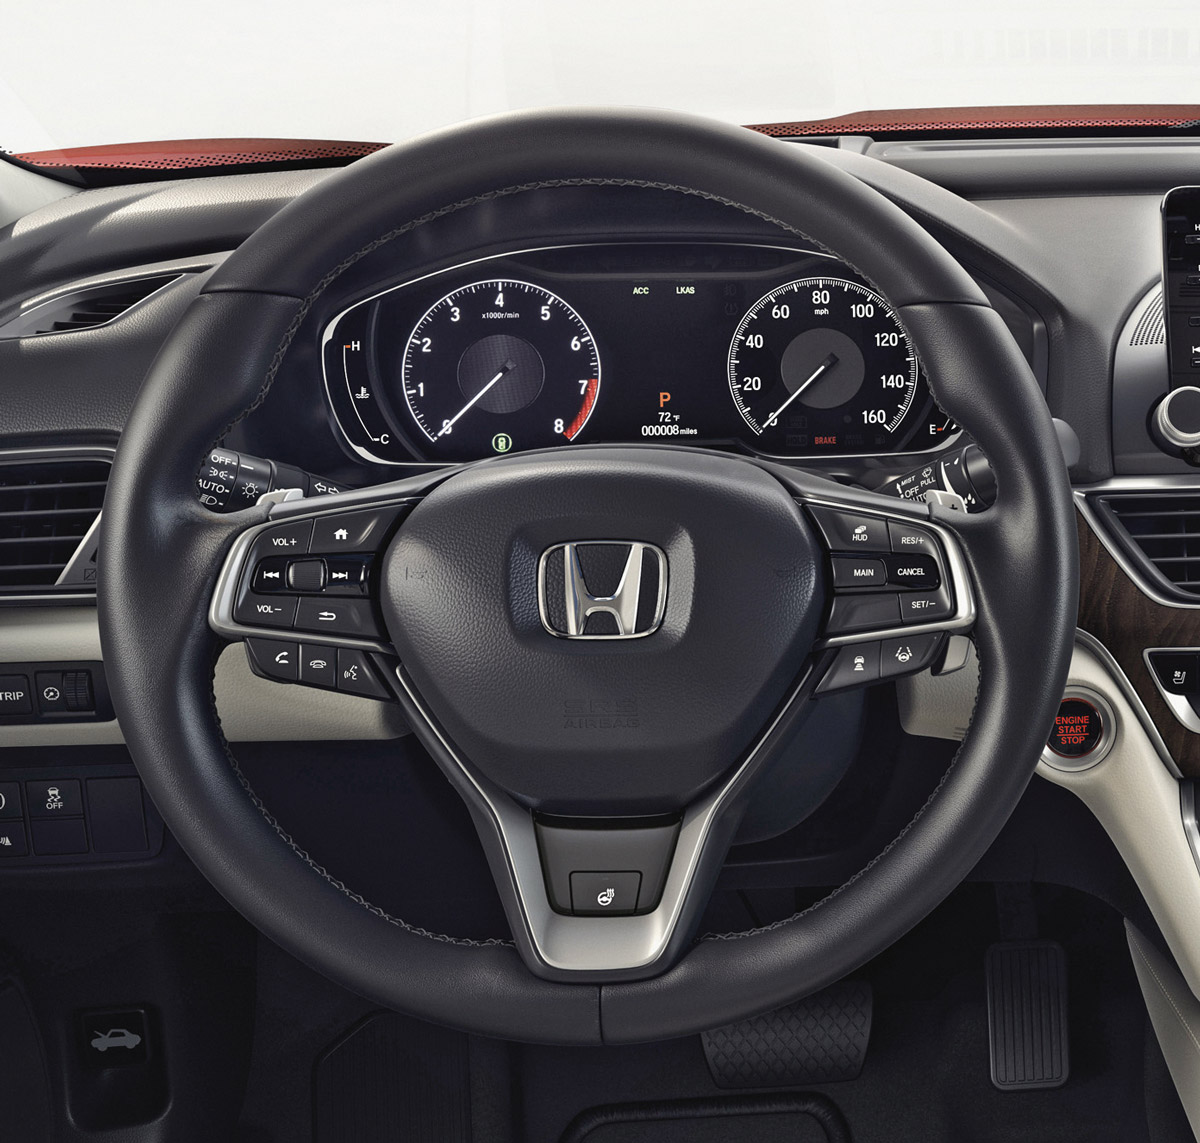 2018 Honda Accord Heated Steering Wheel (w/o Paddle Shifters) - 08U97